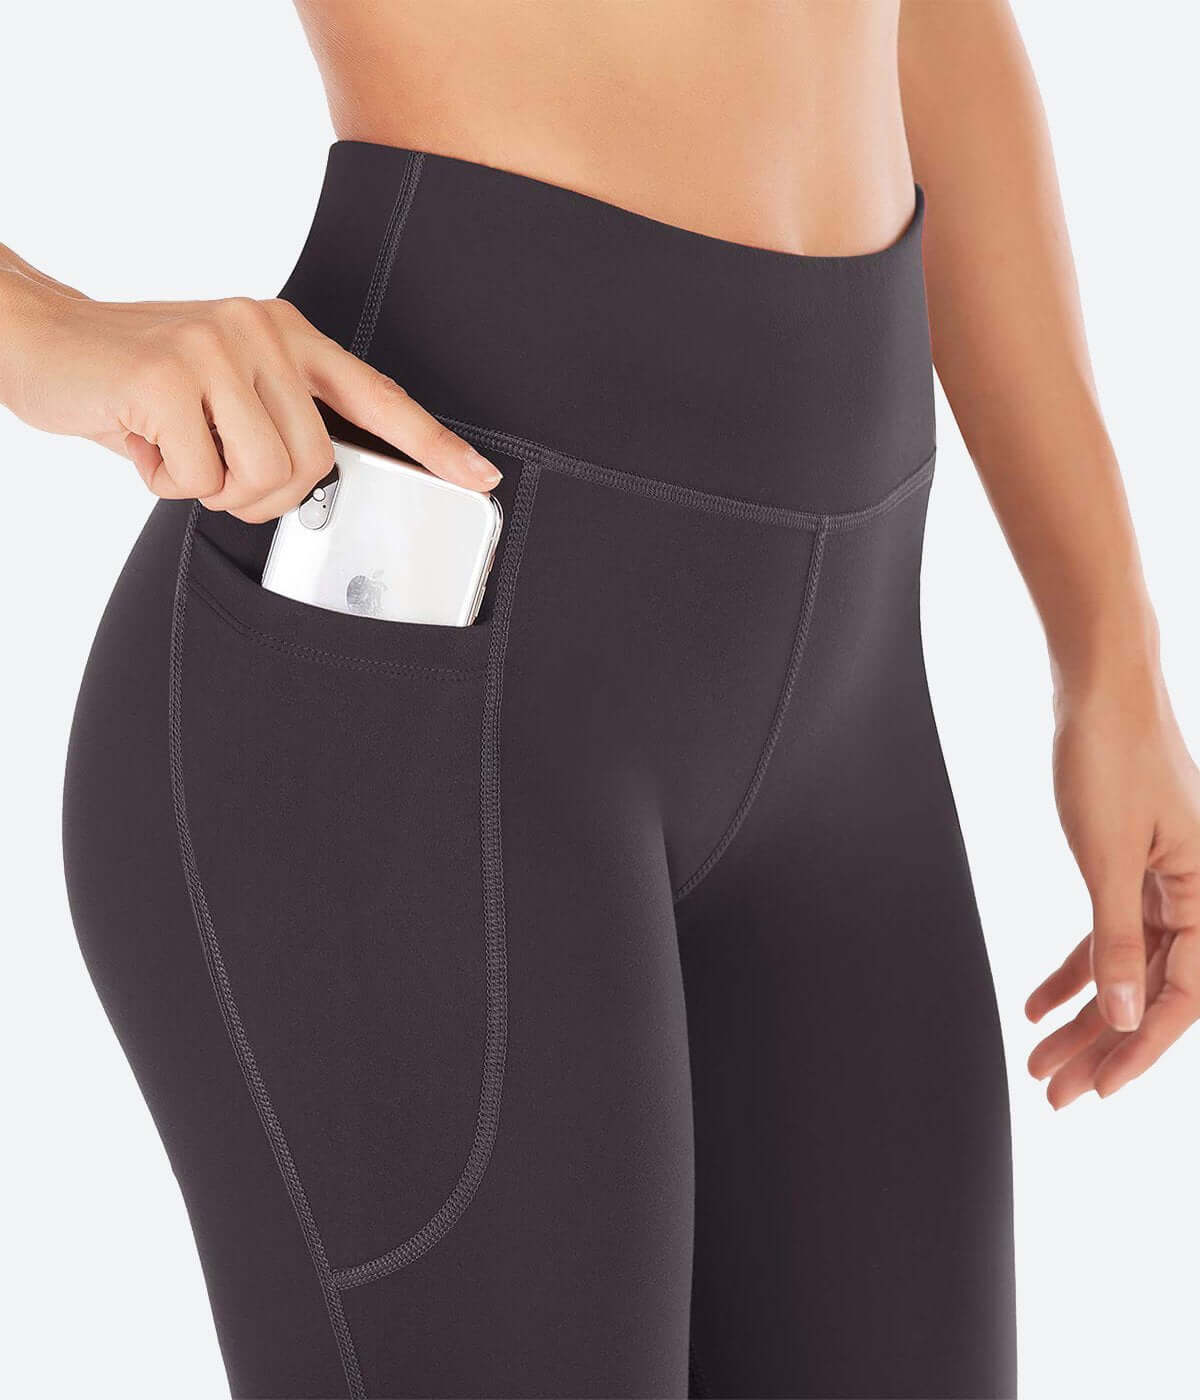 HeathYoga Bootcut Yoga Pants with Pockets